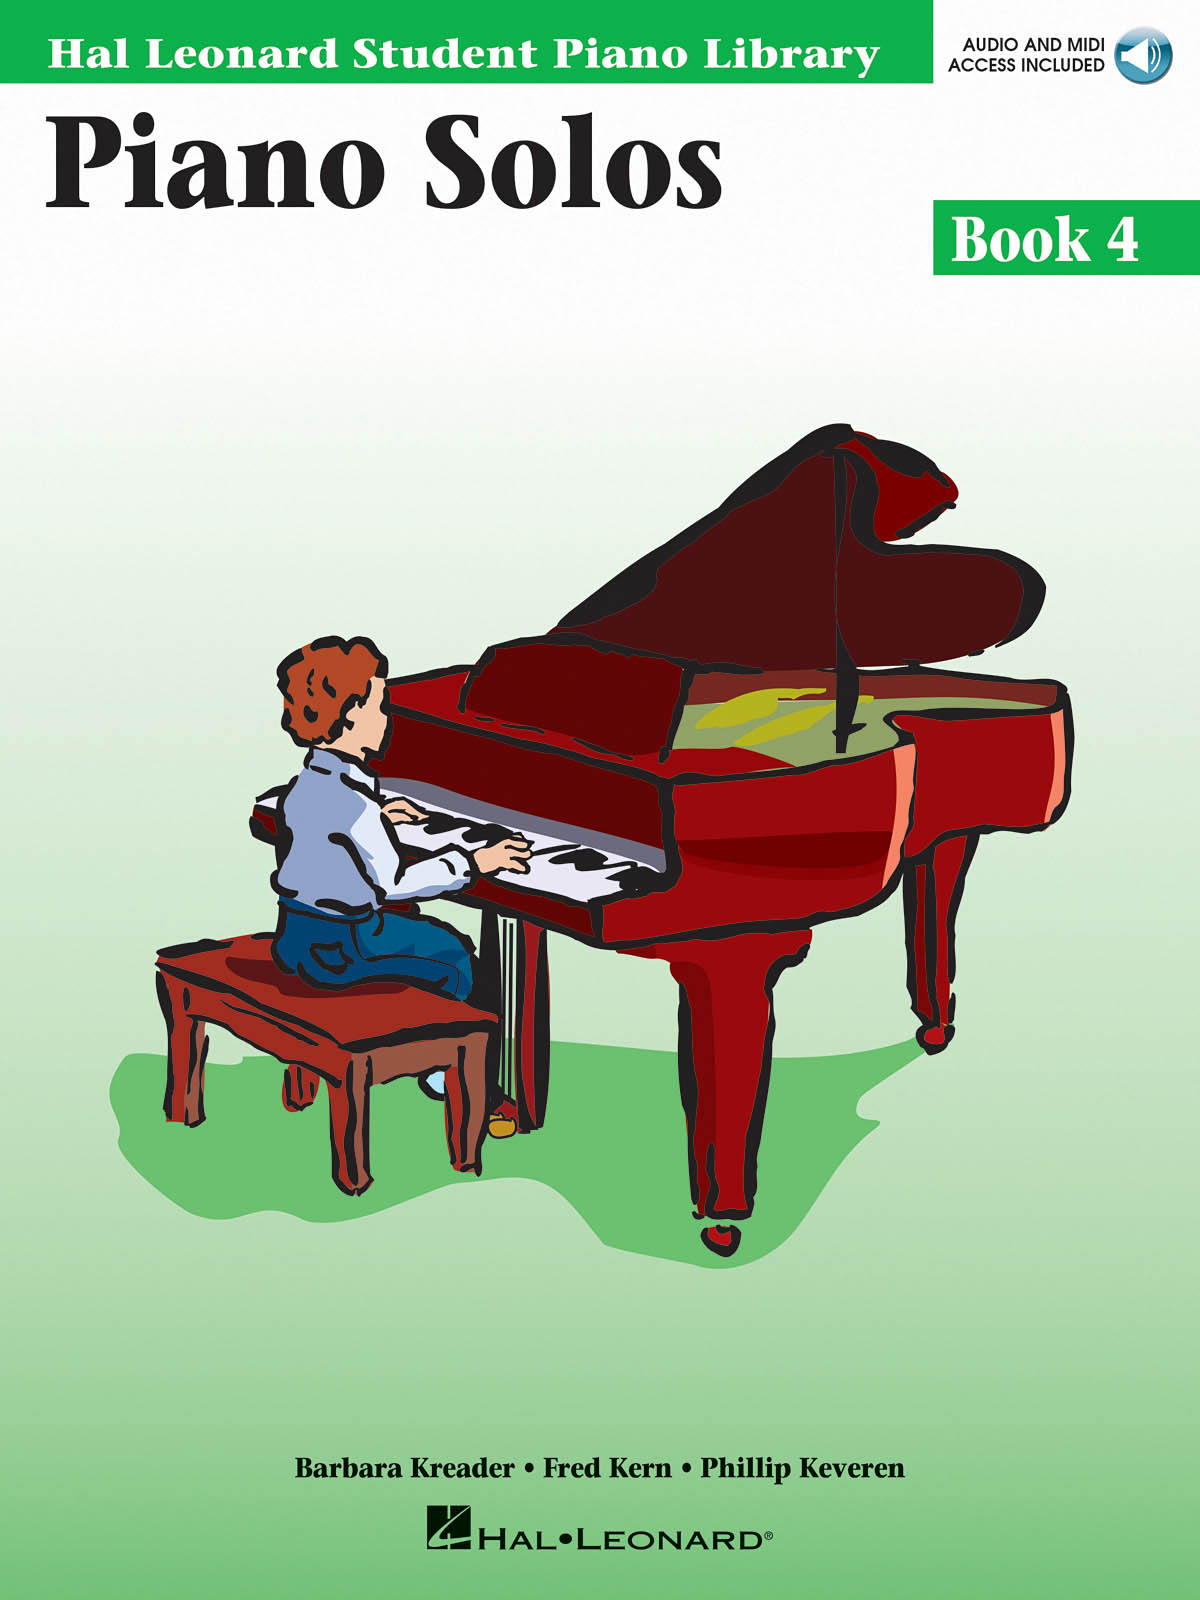 Hal Leonard Student Piano Library: Piano Solos Book 4